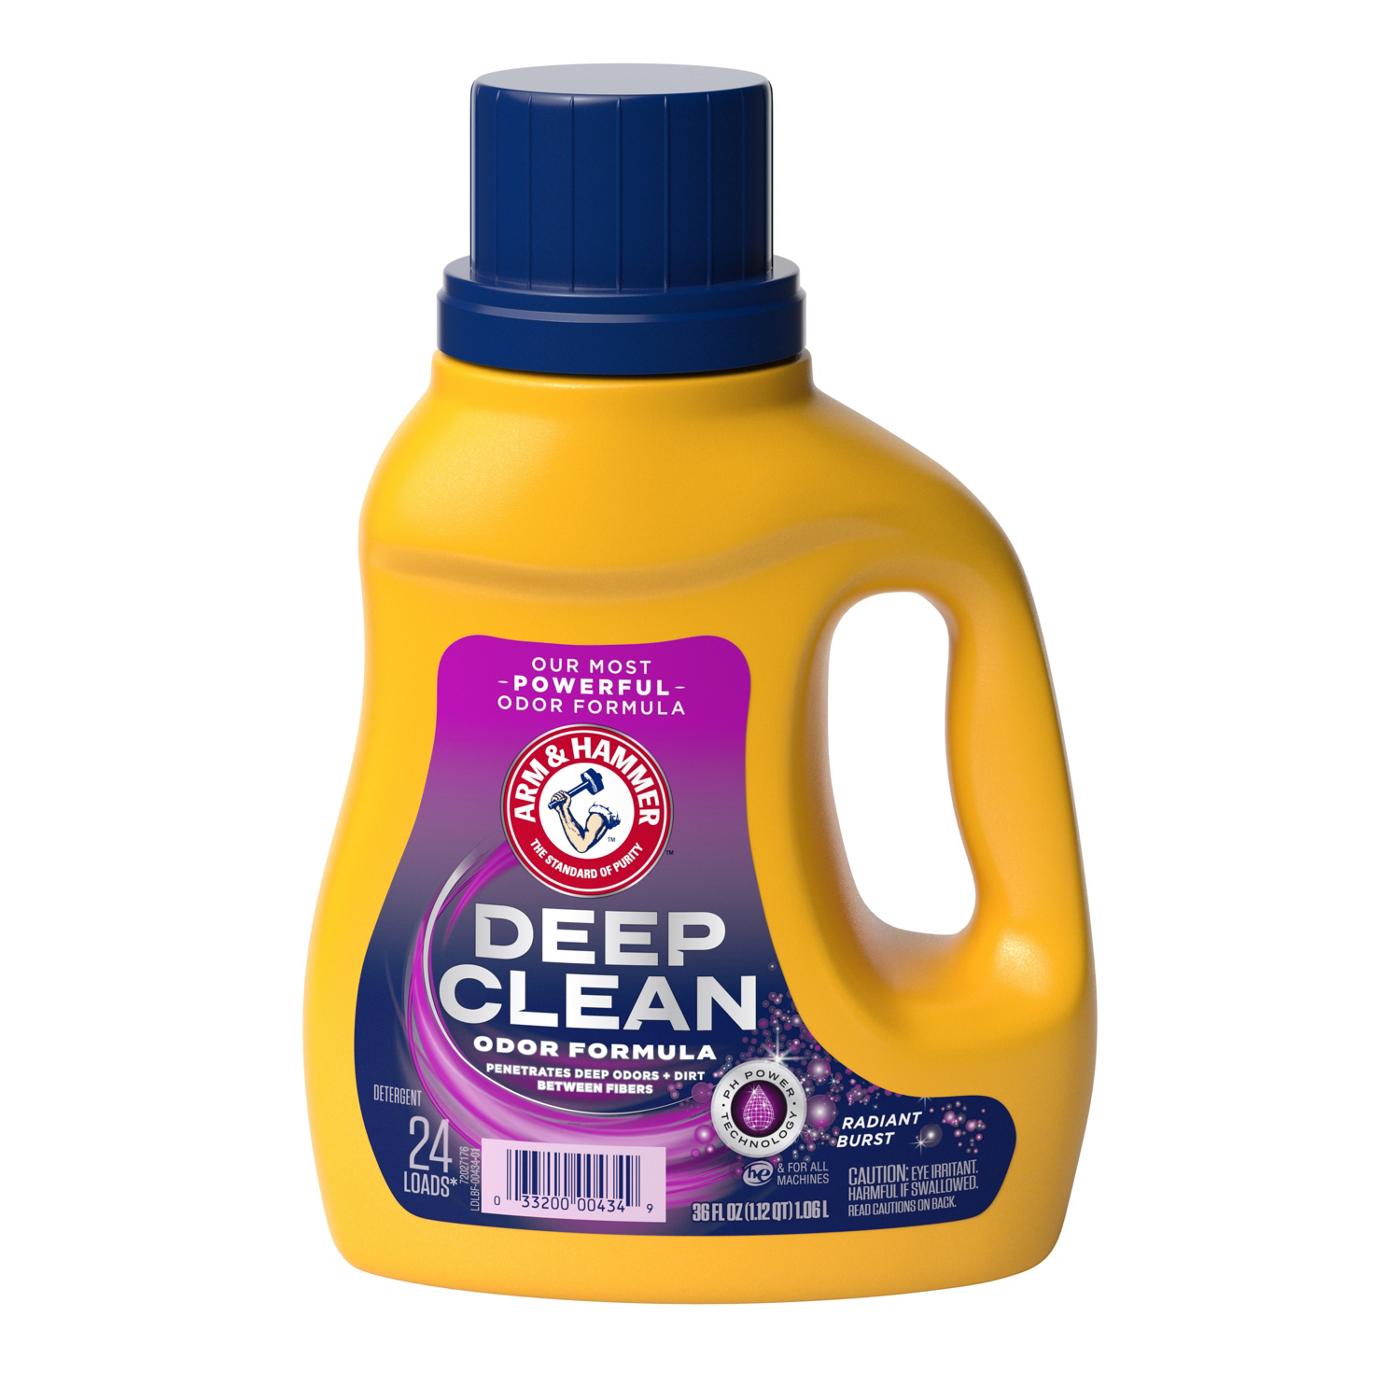 Arm & Hammer Deep Clean Odor HE Liquid Laundry Detergent, 24 Loads - Radiant Burst; image 1 of 2